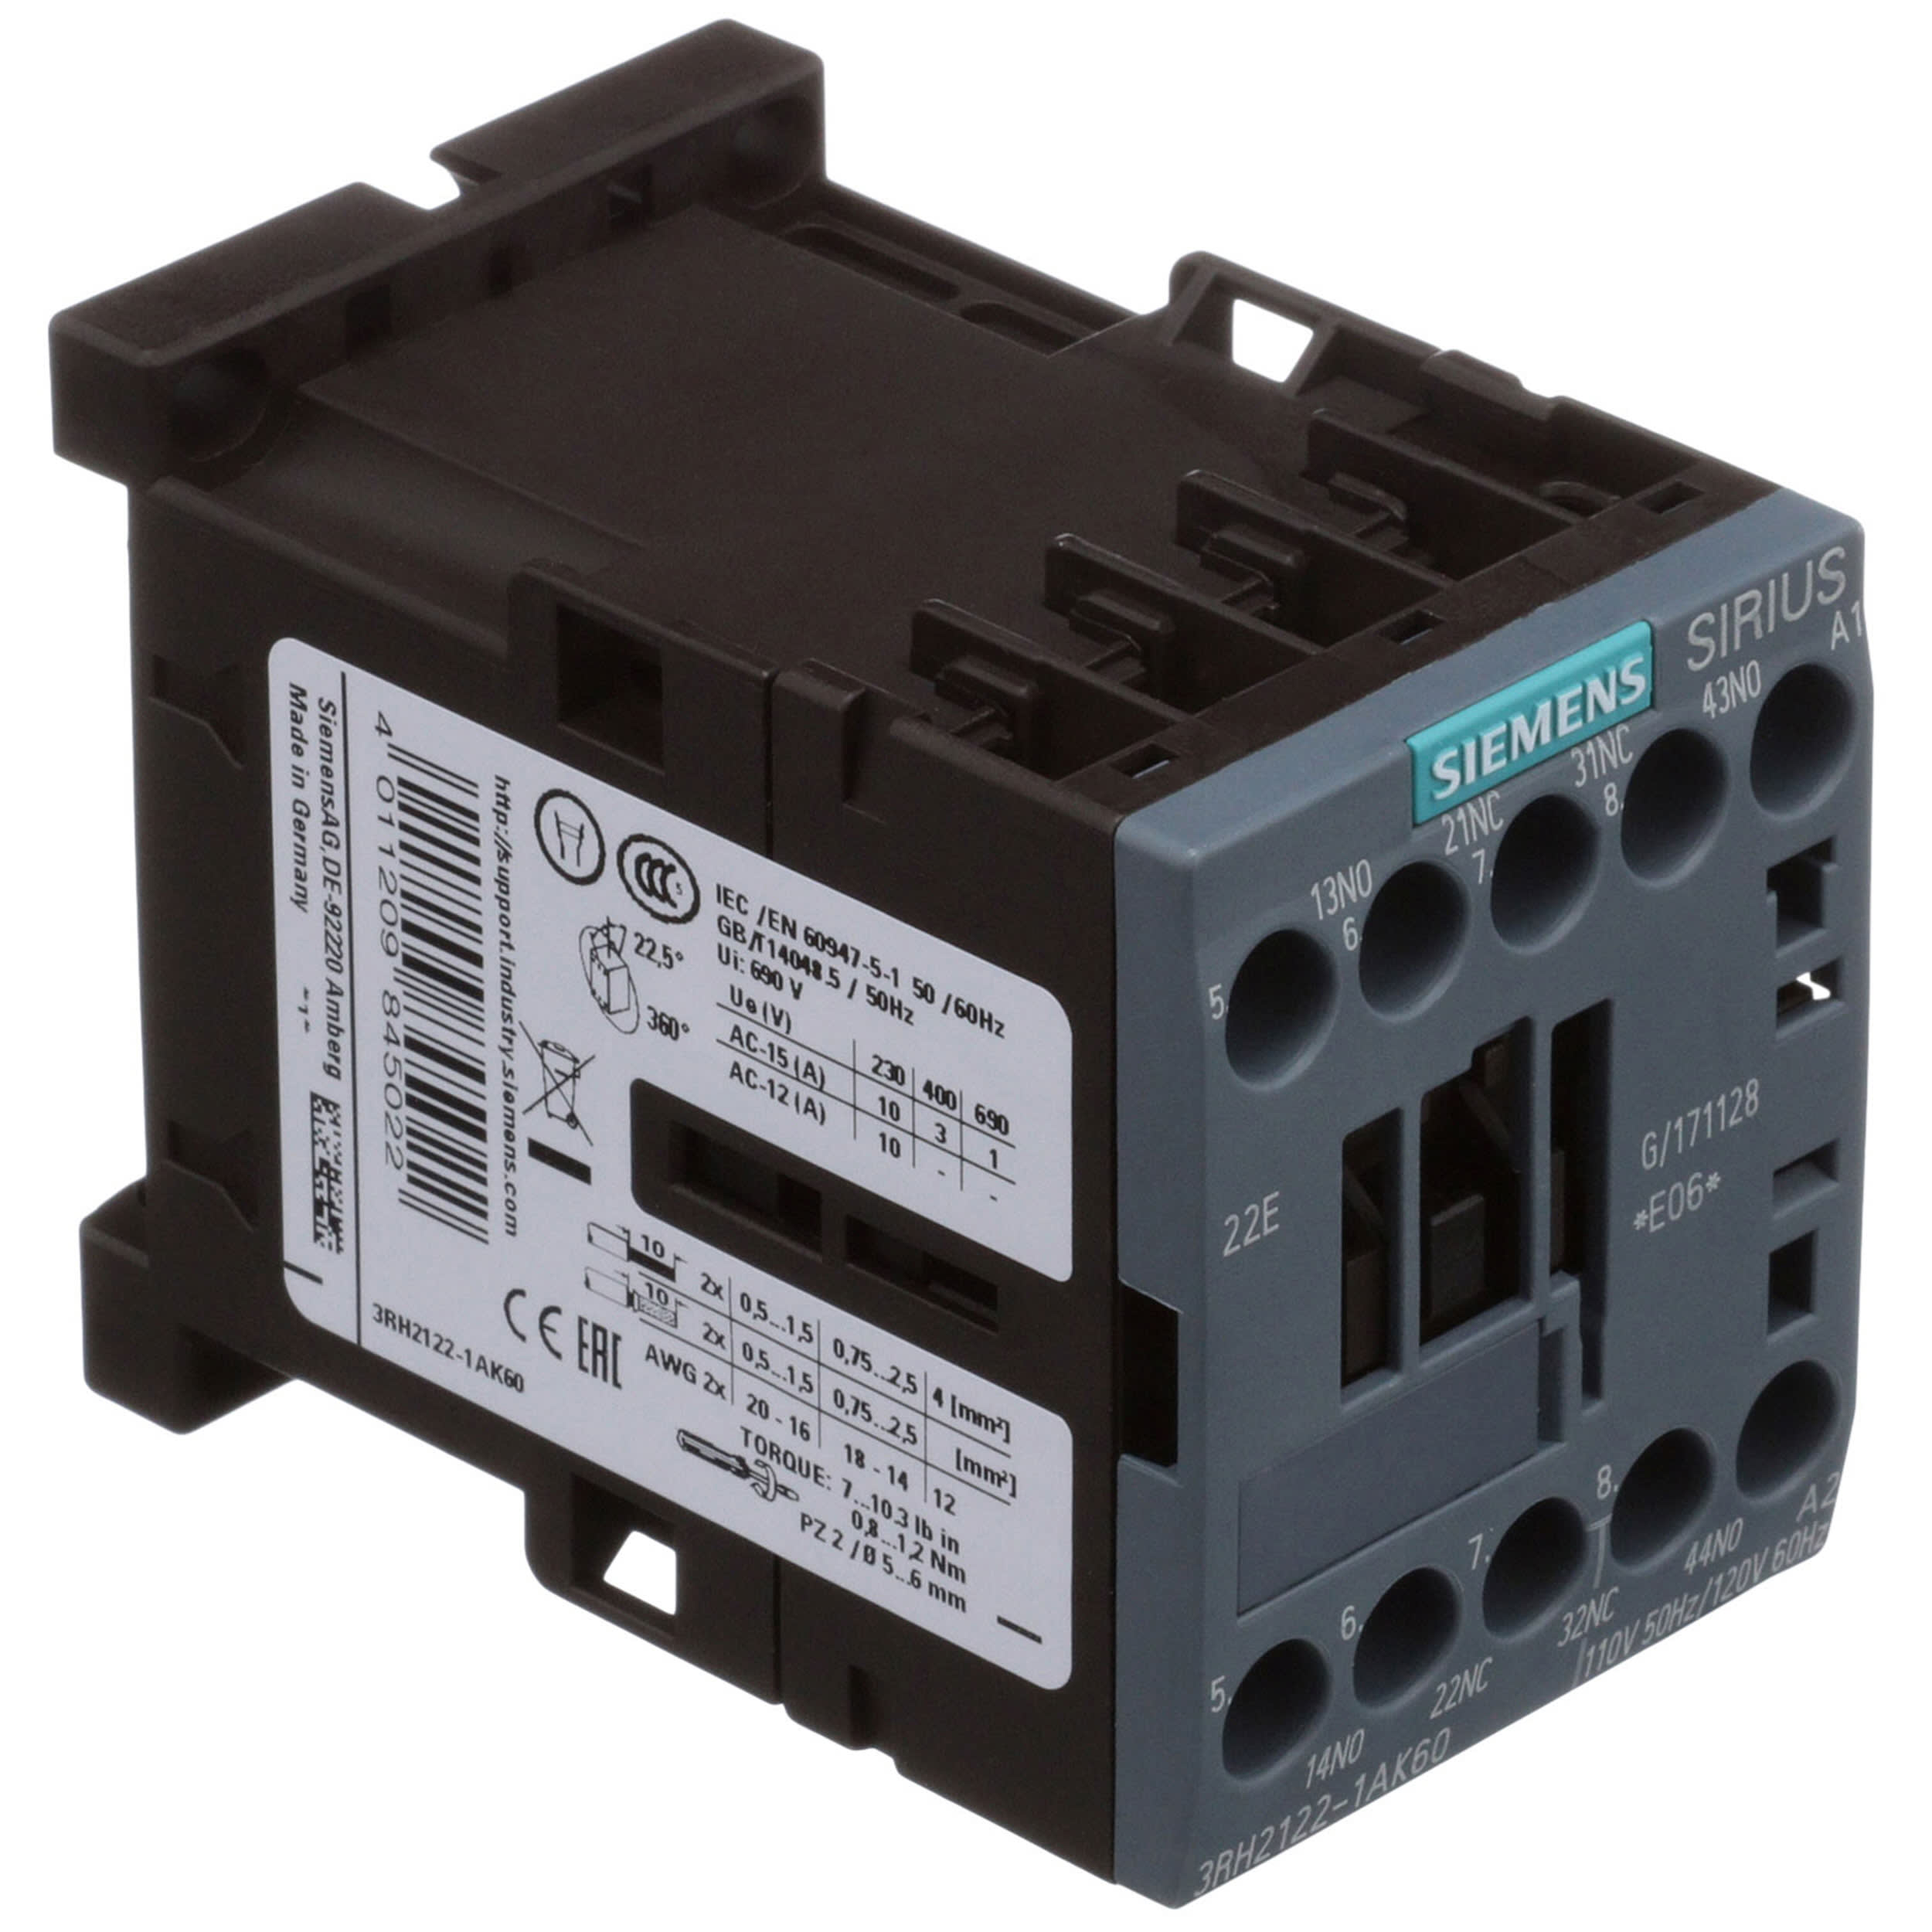 Siemens 3rt1026-1ak60 IEC Contactor Sirius NEMA 1 120vac for sale online 